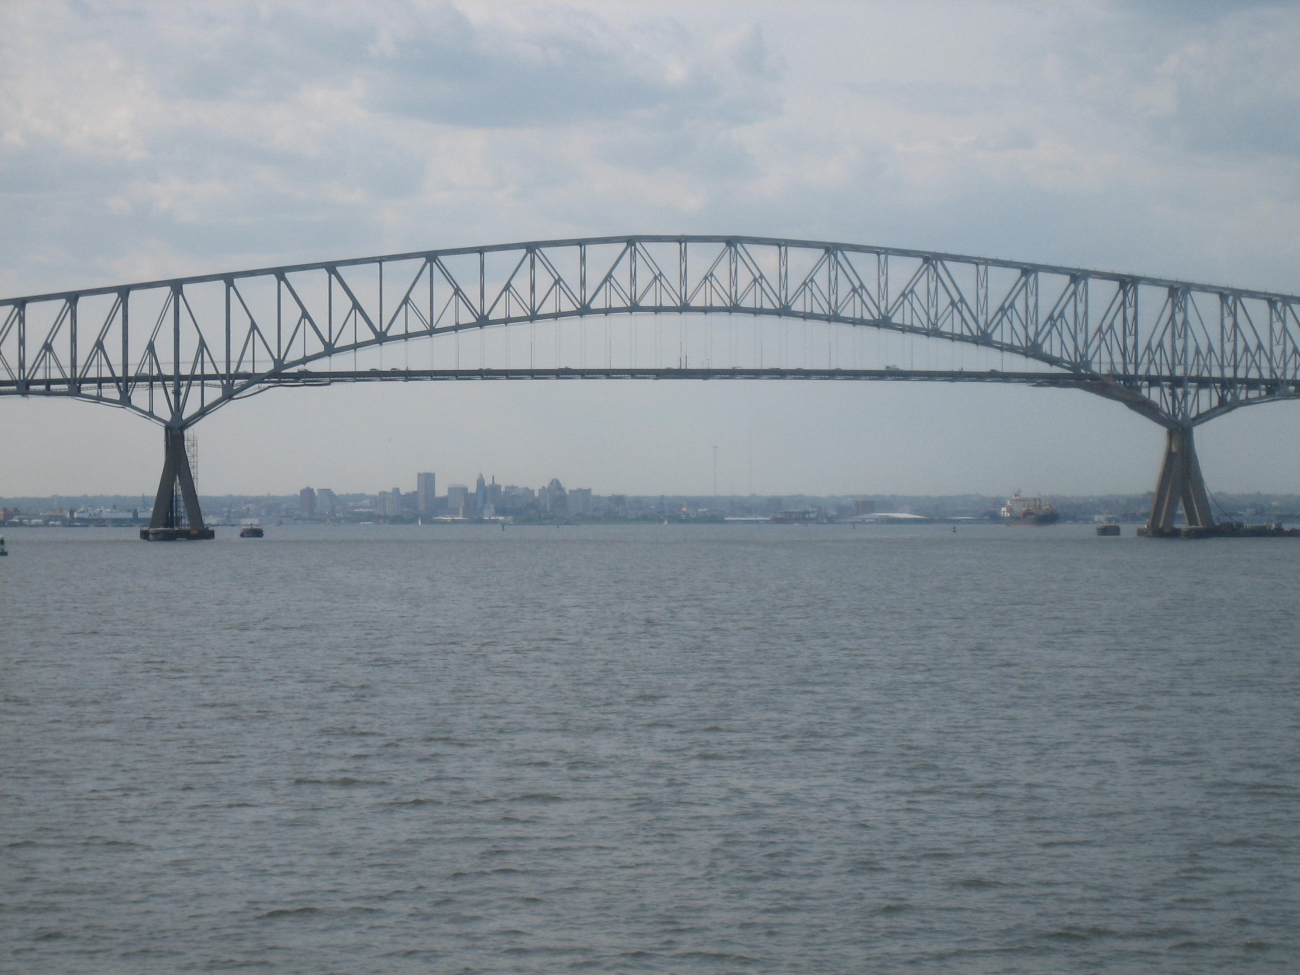 The I-695 Francis Scott Key Bridge spanning Baltimore Harbor